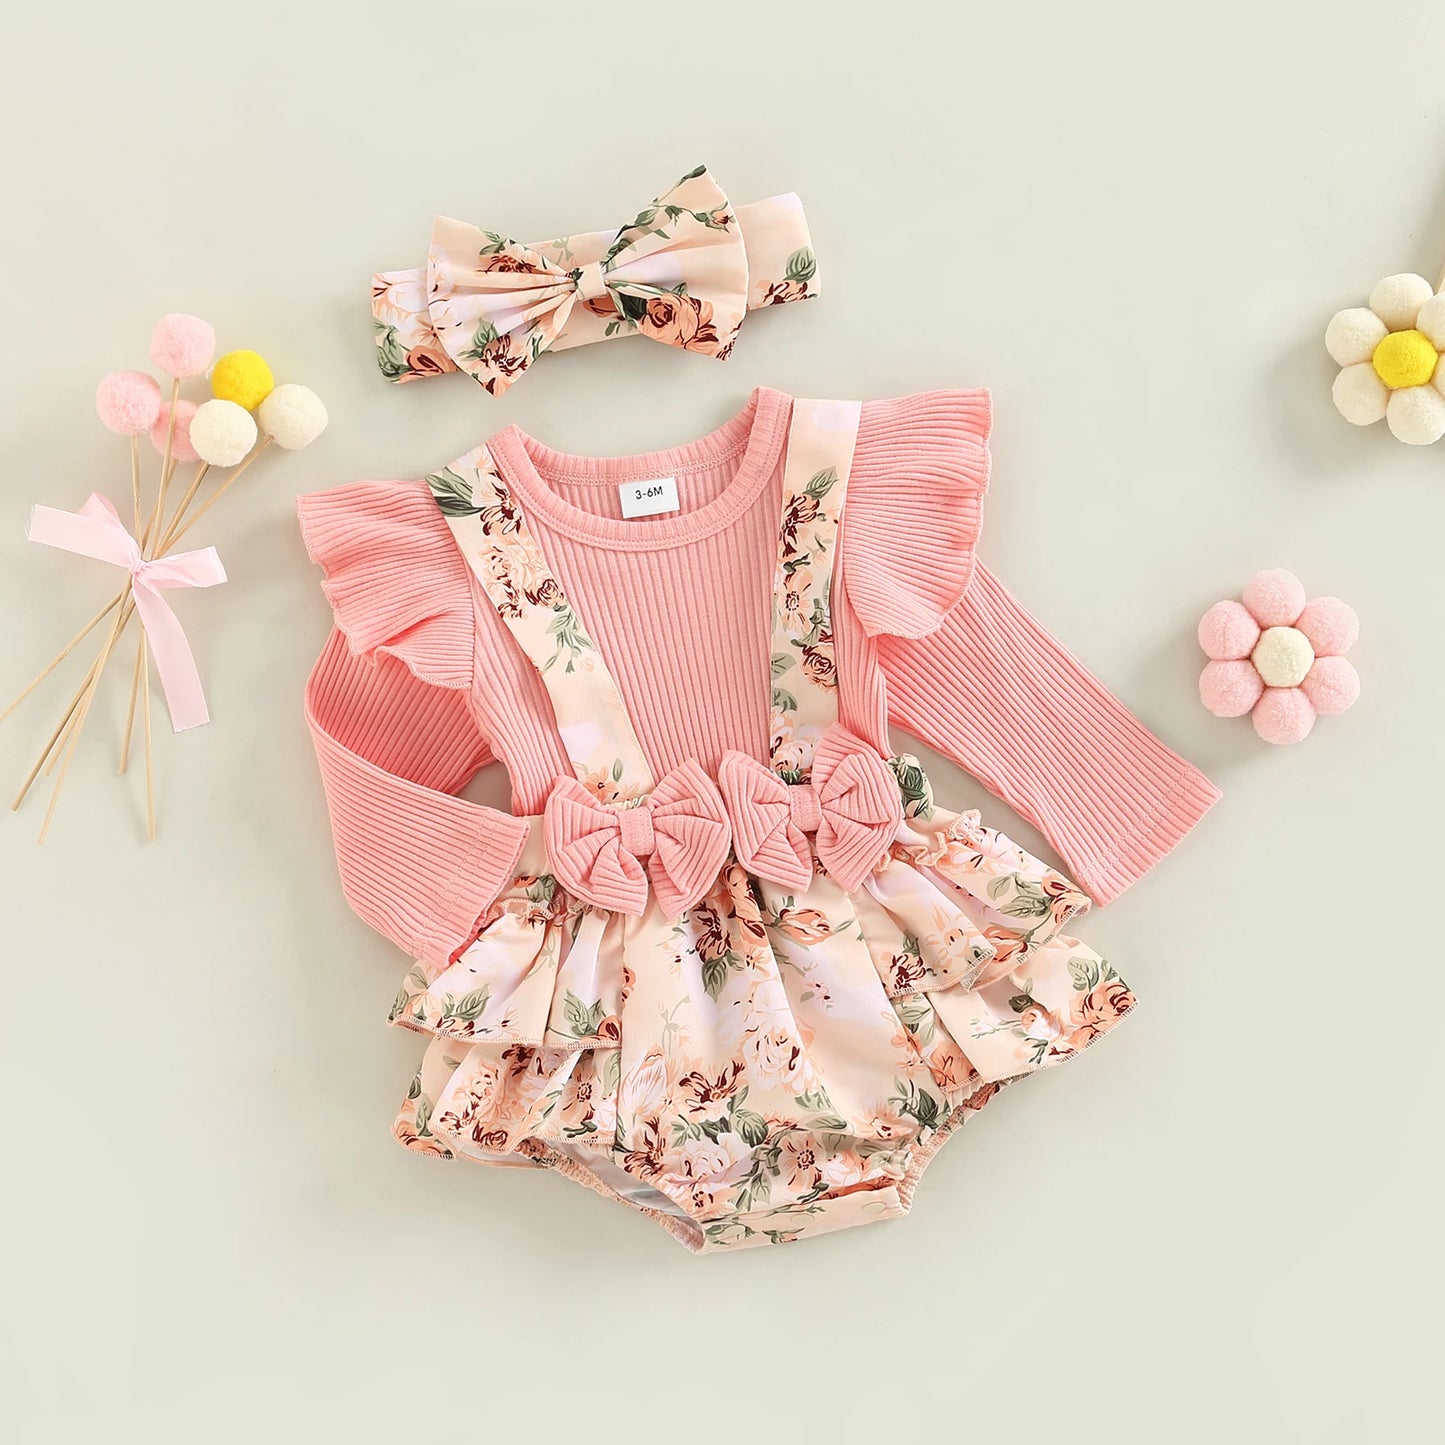 Infant Newborn Baby Girls 2Pcs Spring Autumn Outfits, Long Sleeve Romper Floral Suspender Dress + Headband Set